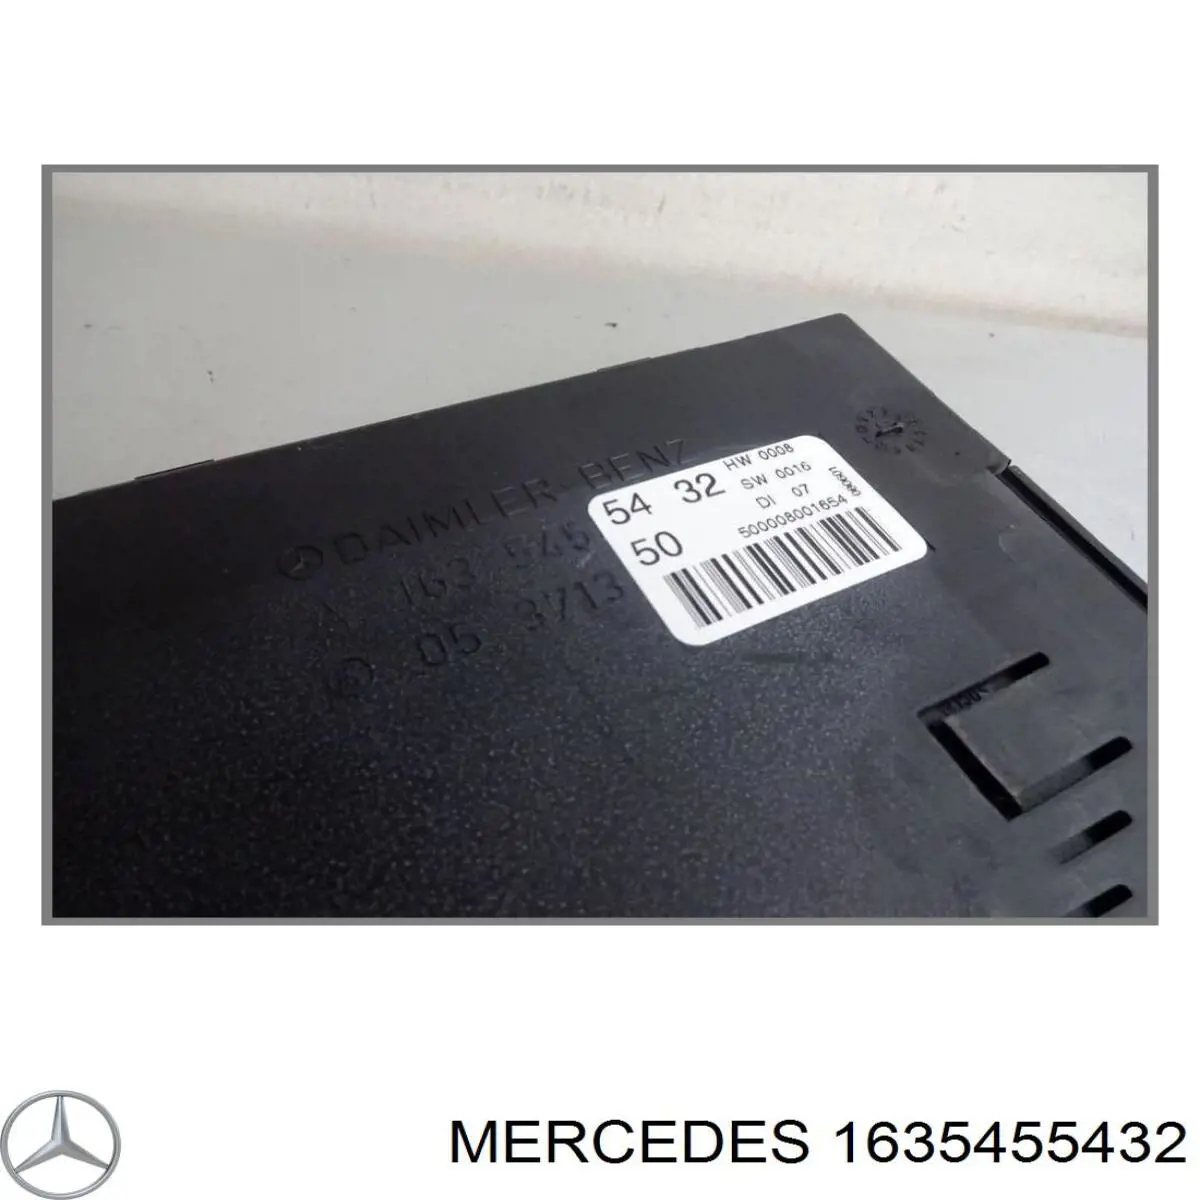 1635455432 Mercedes